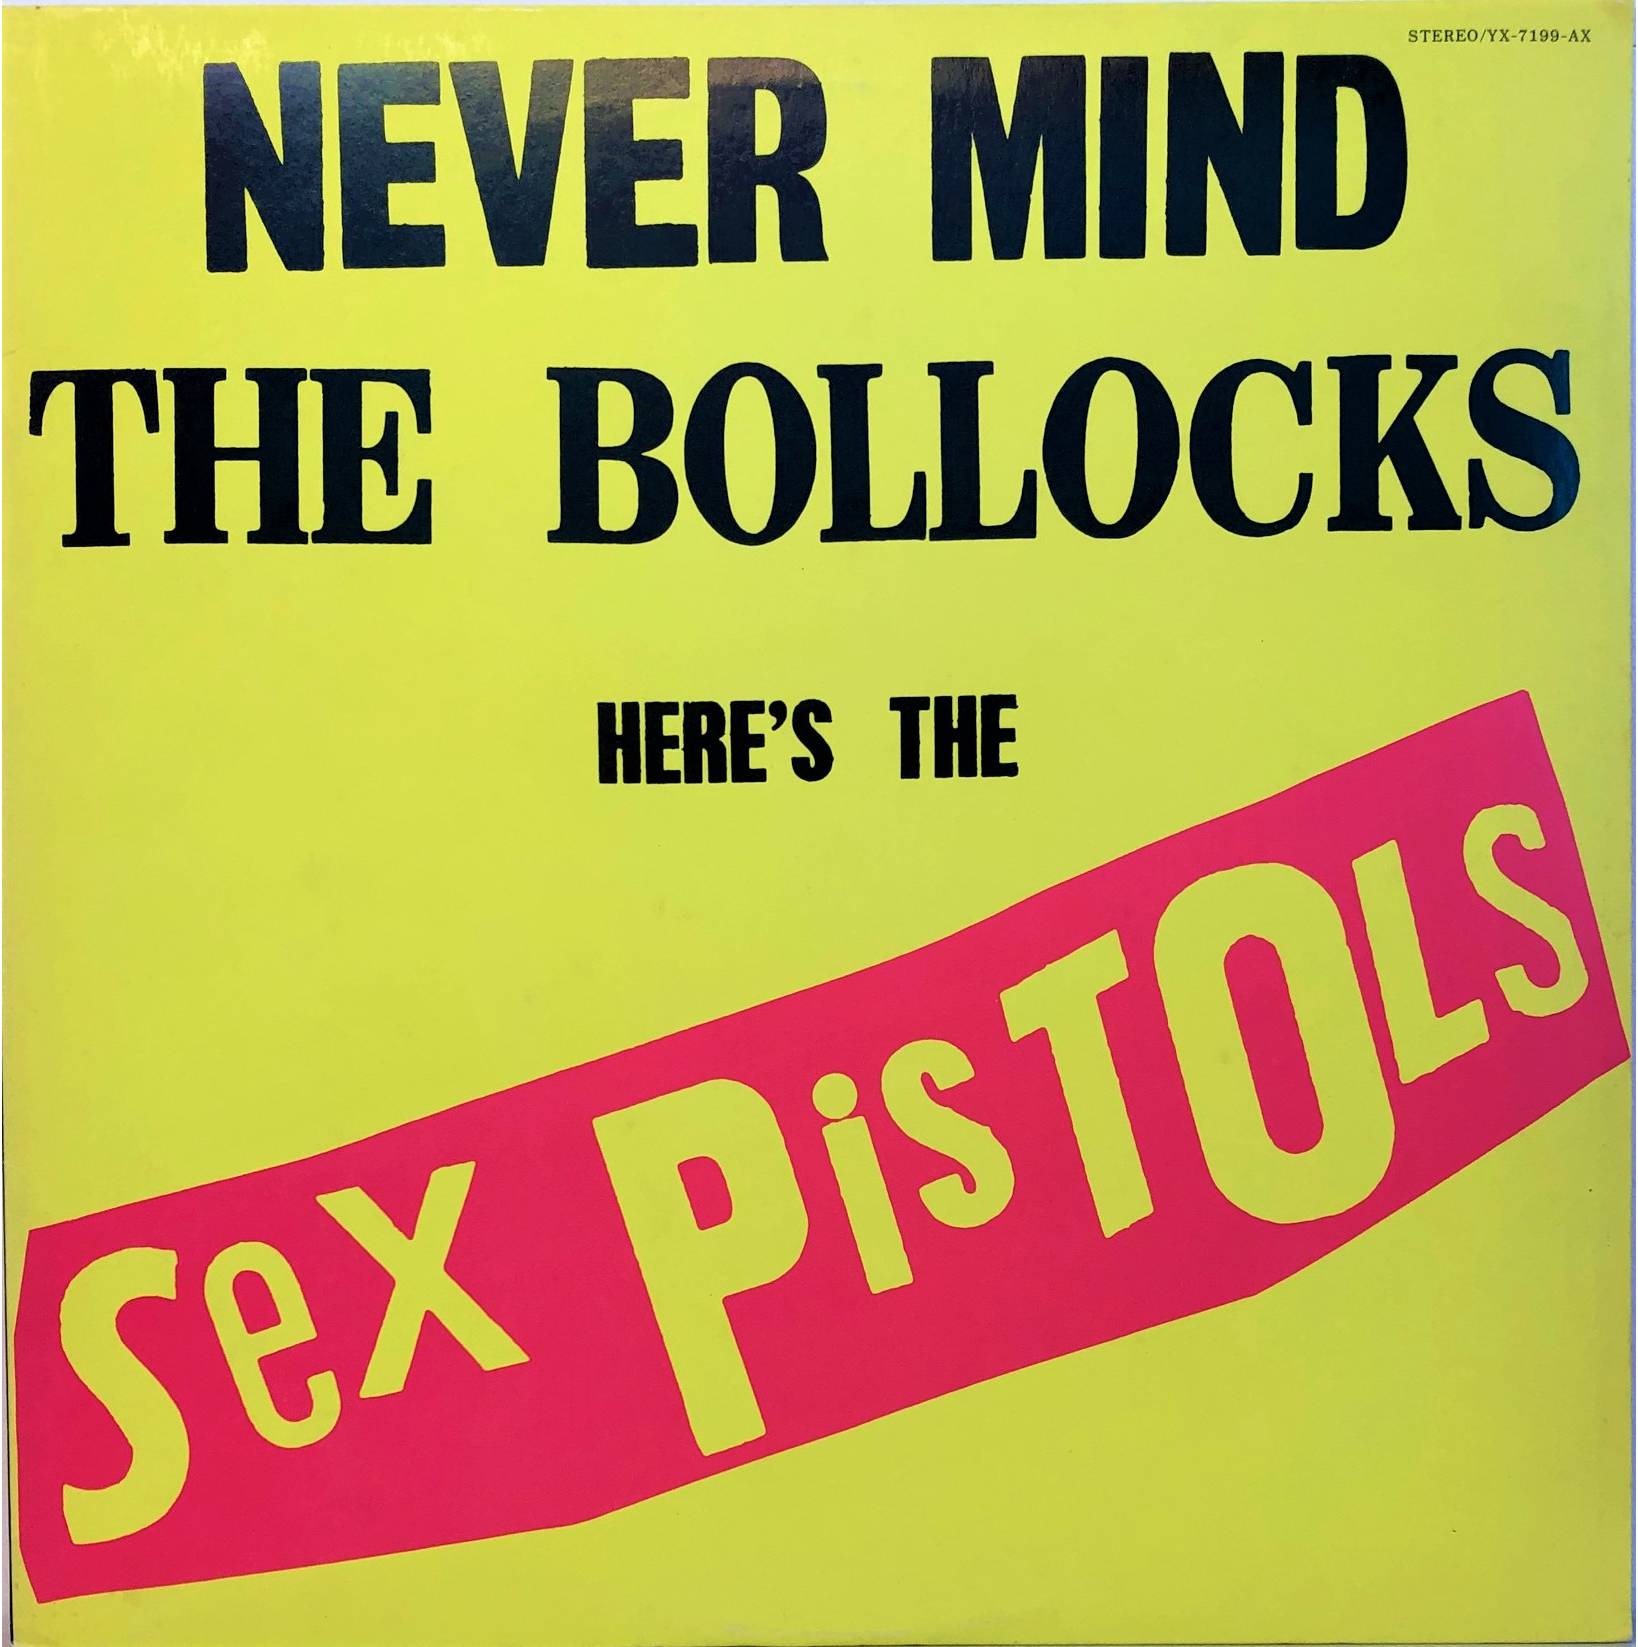 Sex Pistols / Never Mind【国内 初版レコード】アナログ